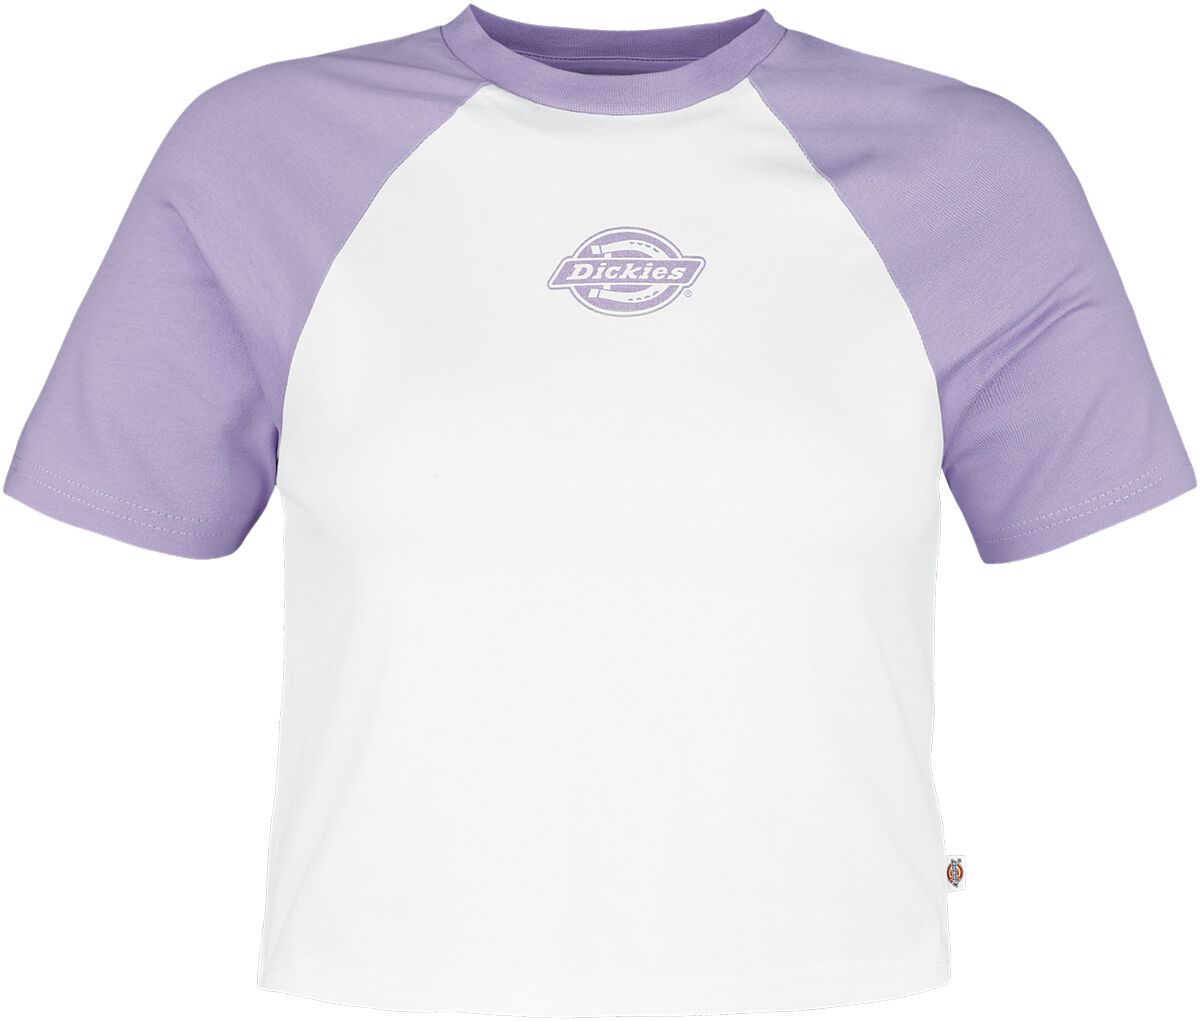 Image of T-Shirt di Dickies - Sodaville t-shirt - XS a L - Donna - porpora/bianco